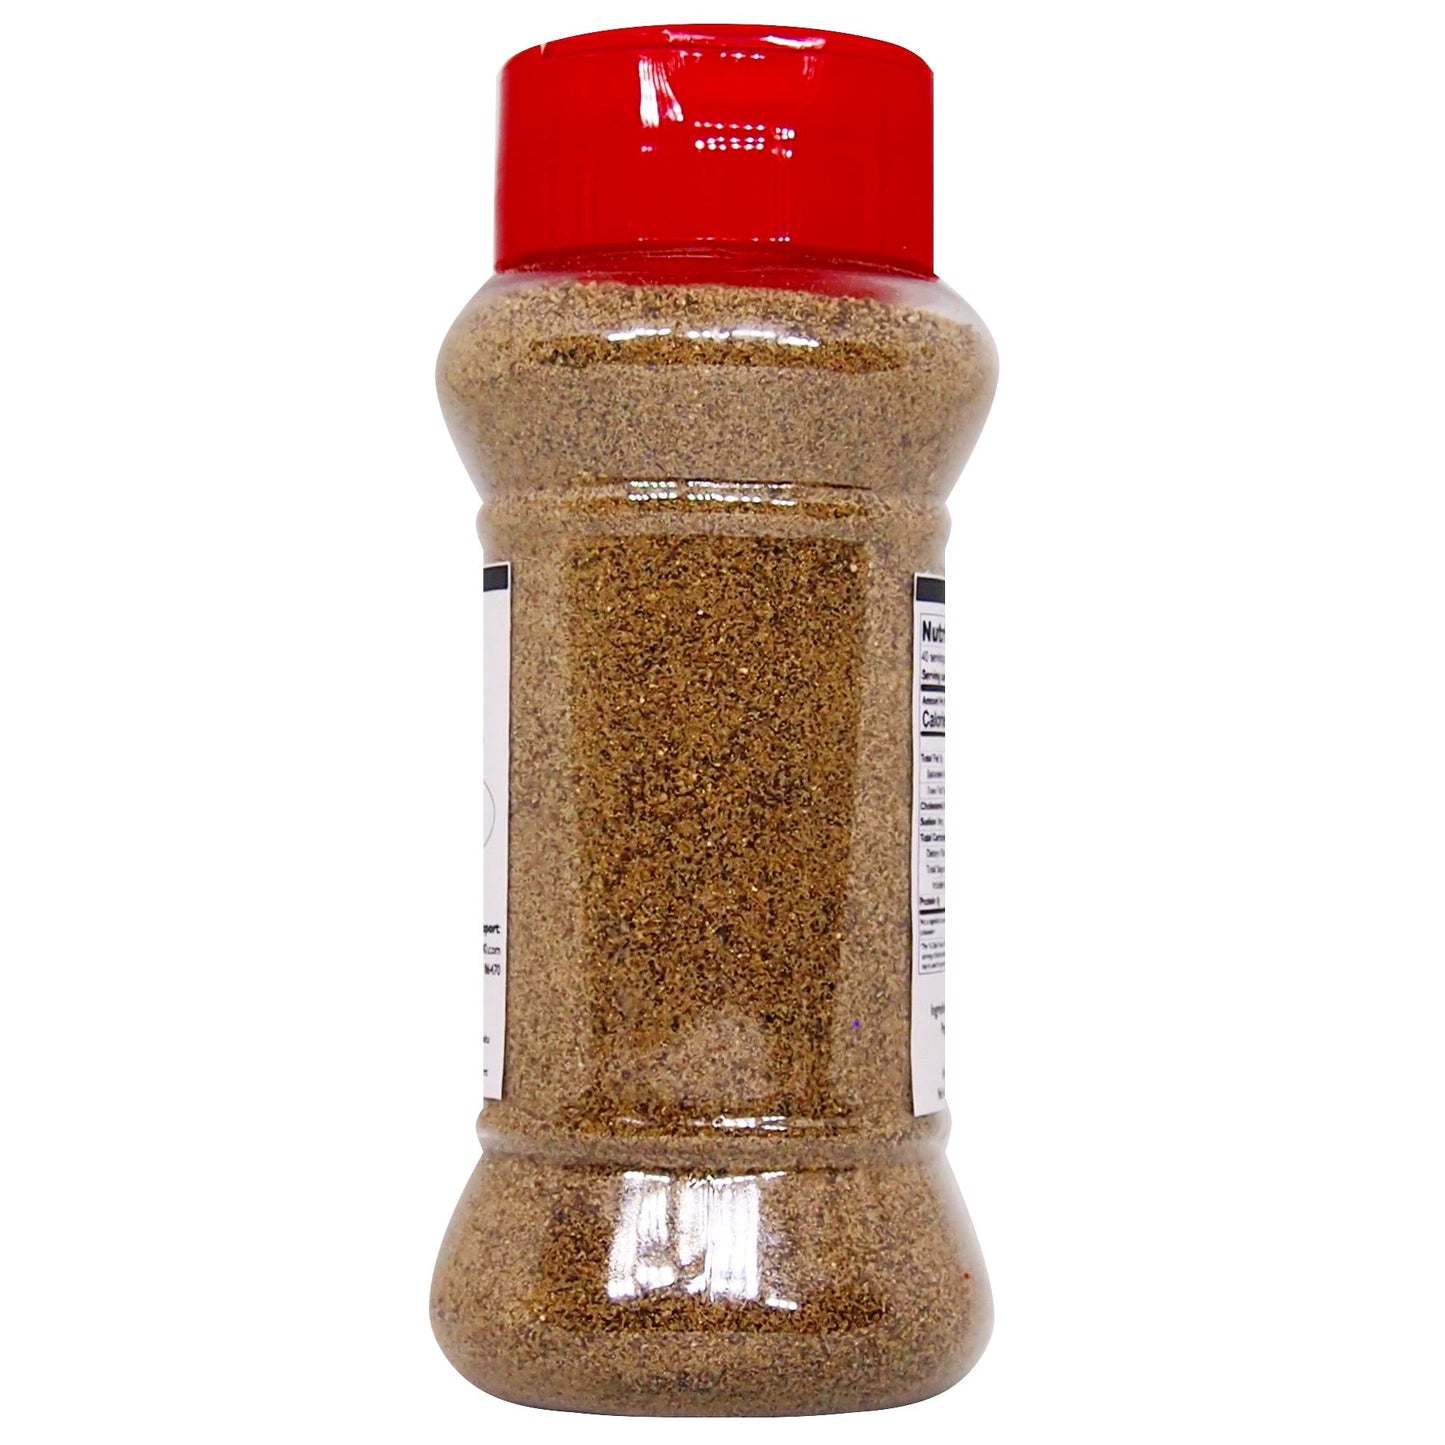 Black Pepper Powder 80g - Tassyam Organics